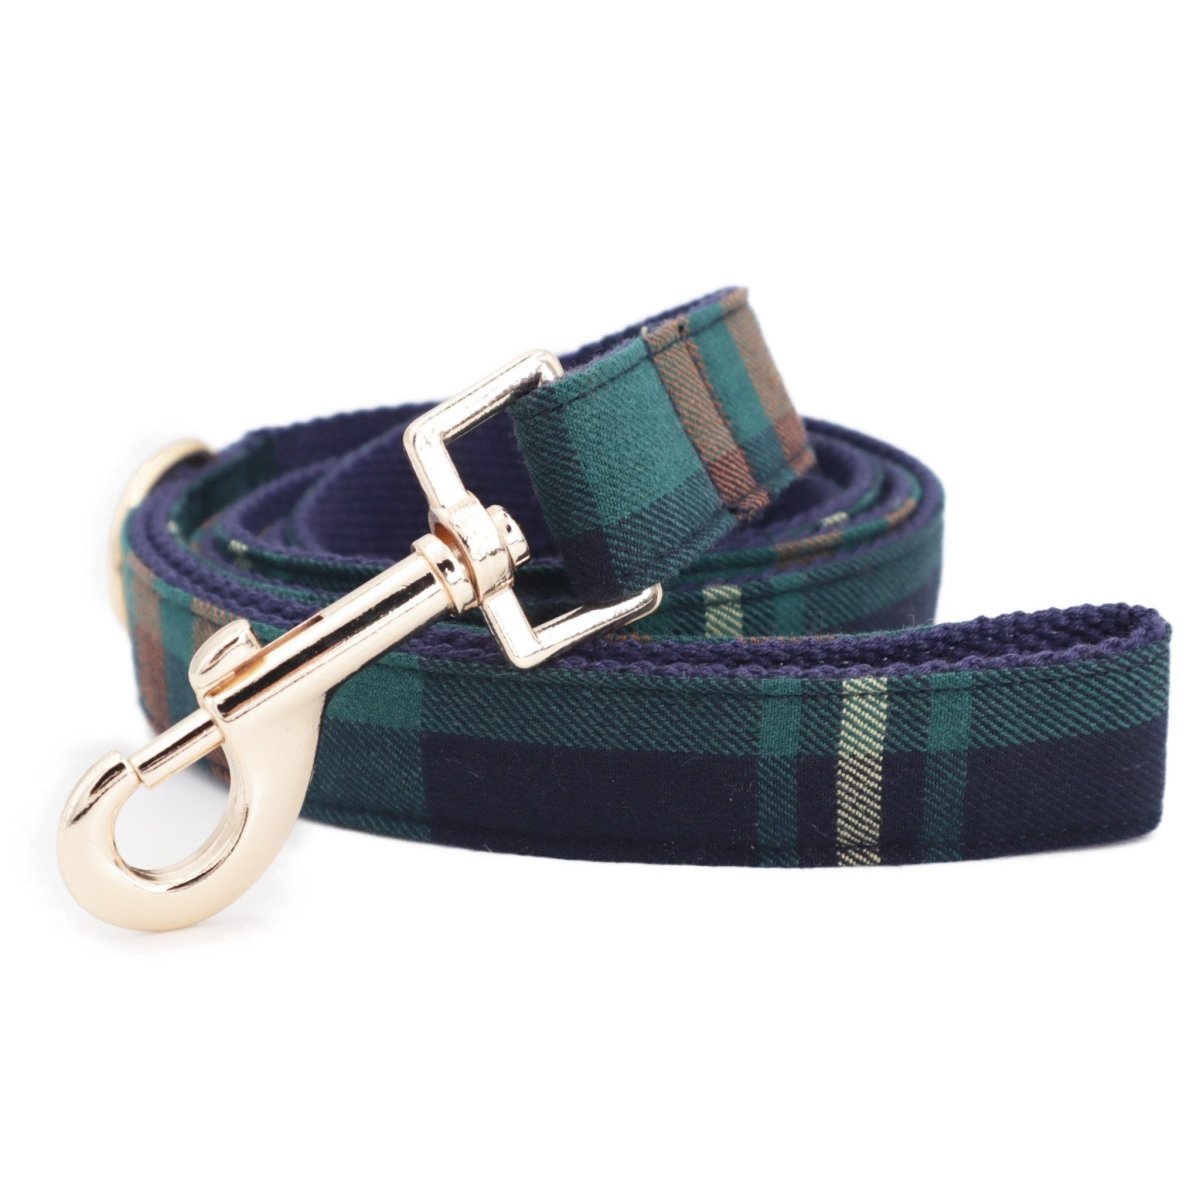 cute dog bow tie collar and leash - dog collars canada - designer dog bowtie collar